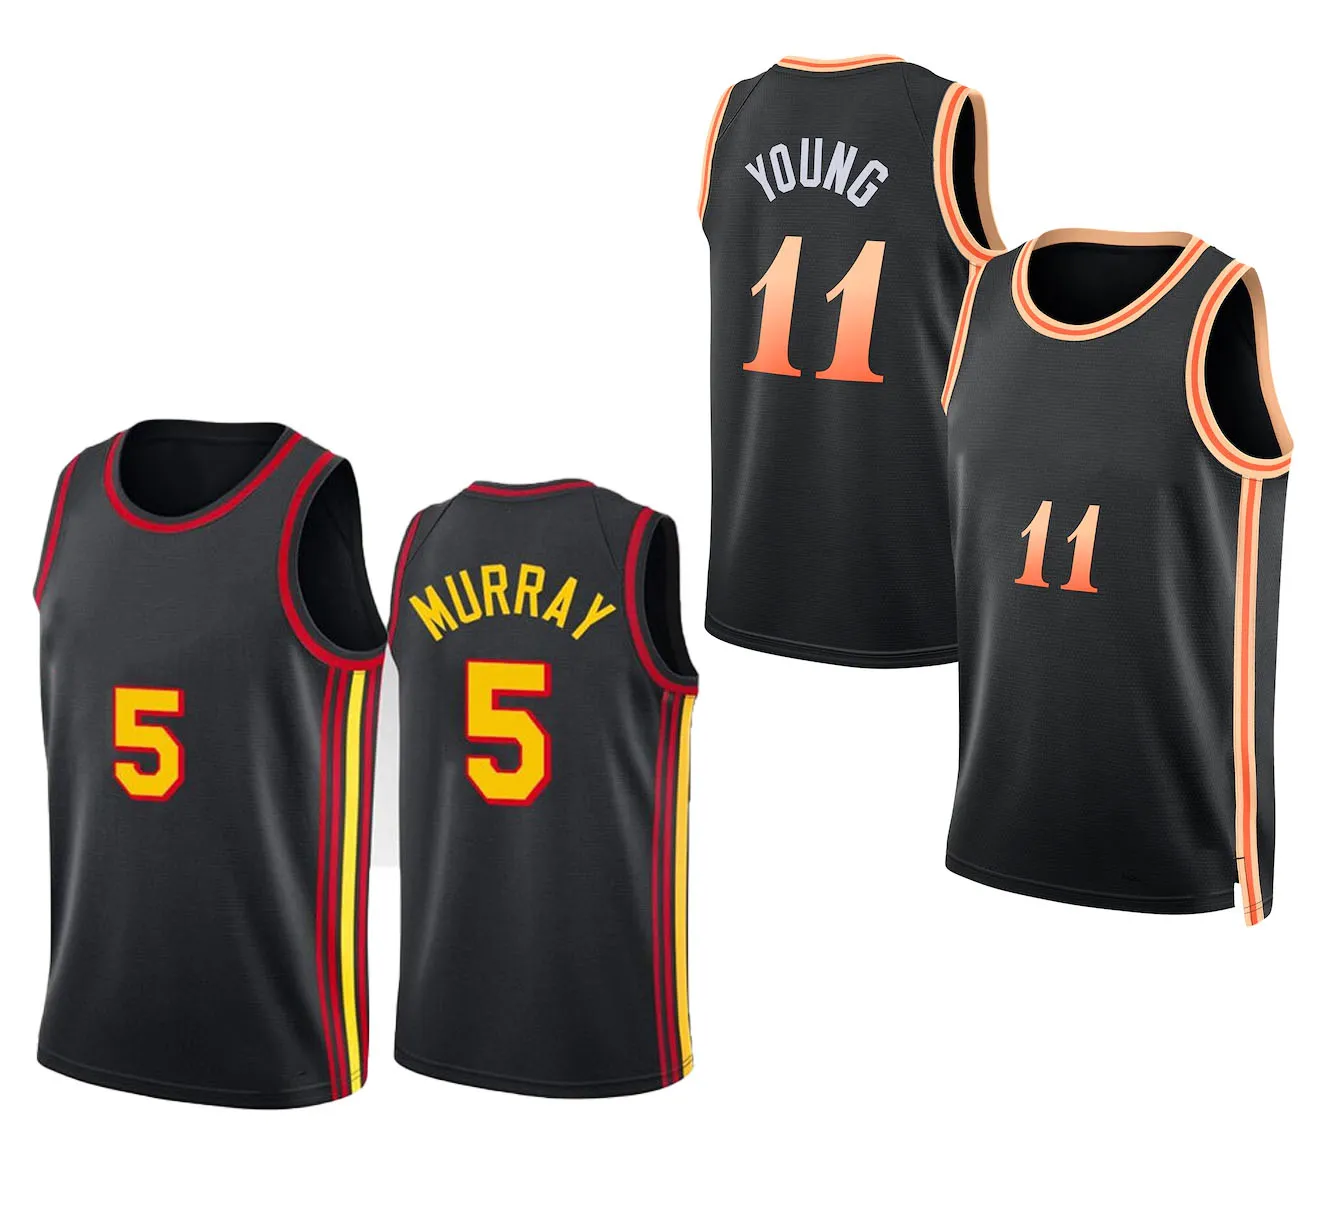 5 Murray 11 Young 2022 Basketball Jersys Yakuda 매장 온라인 도매 대학은 편안한 스포츠웨어 스포츠 도매 인기